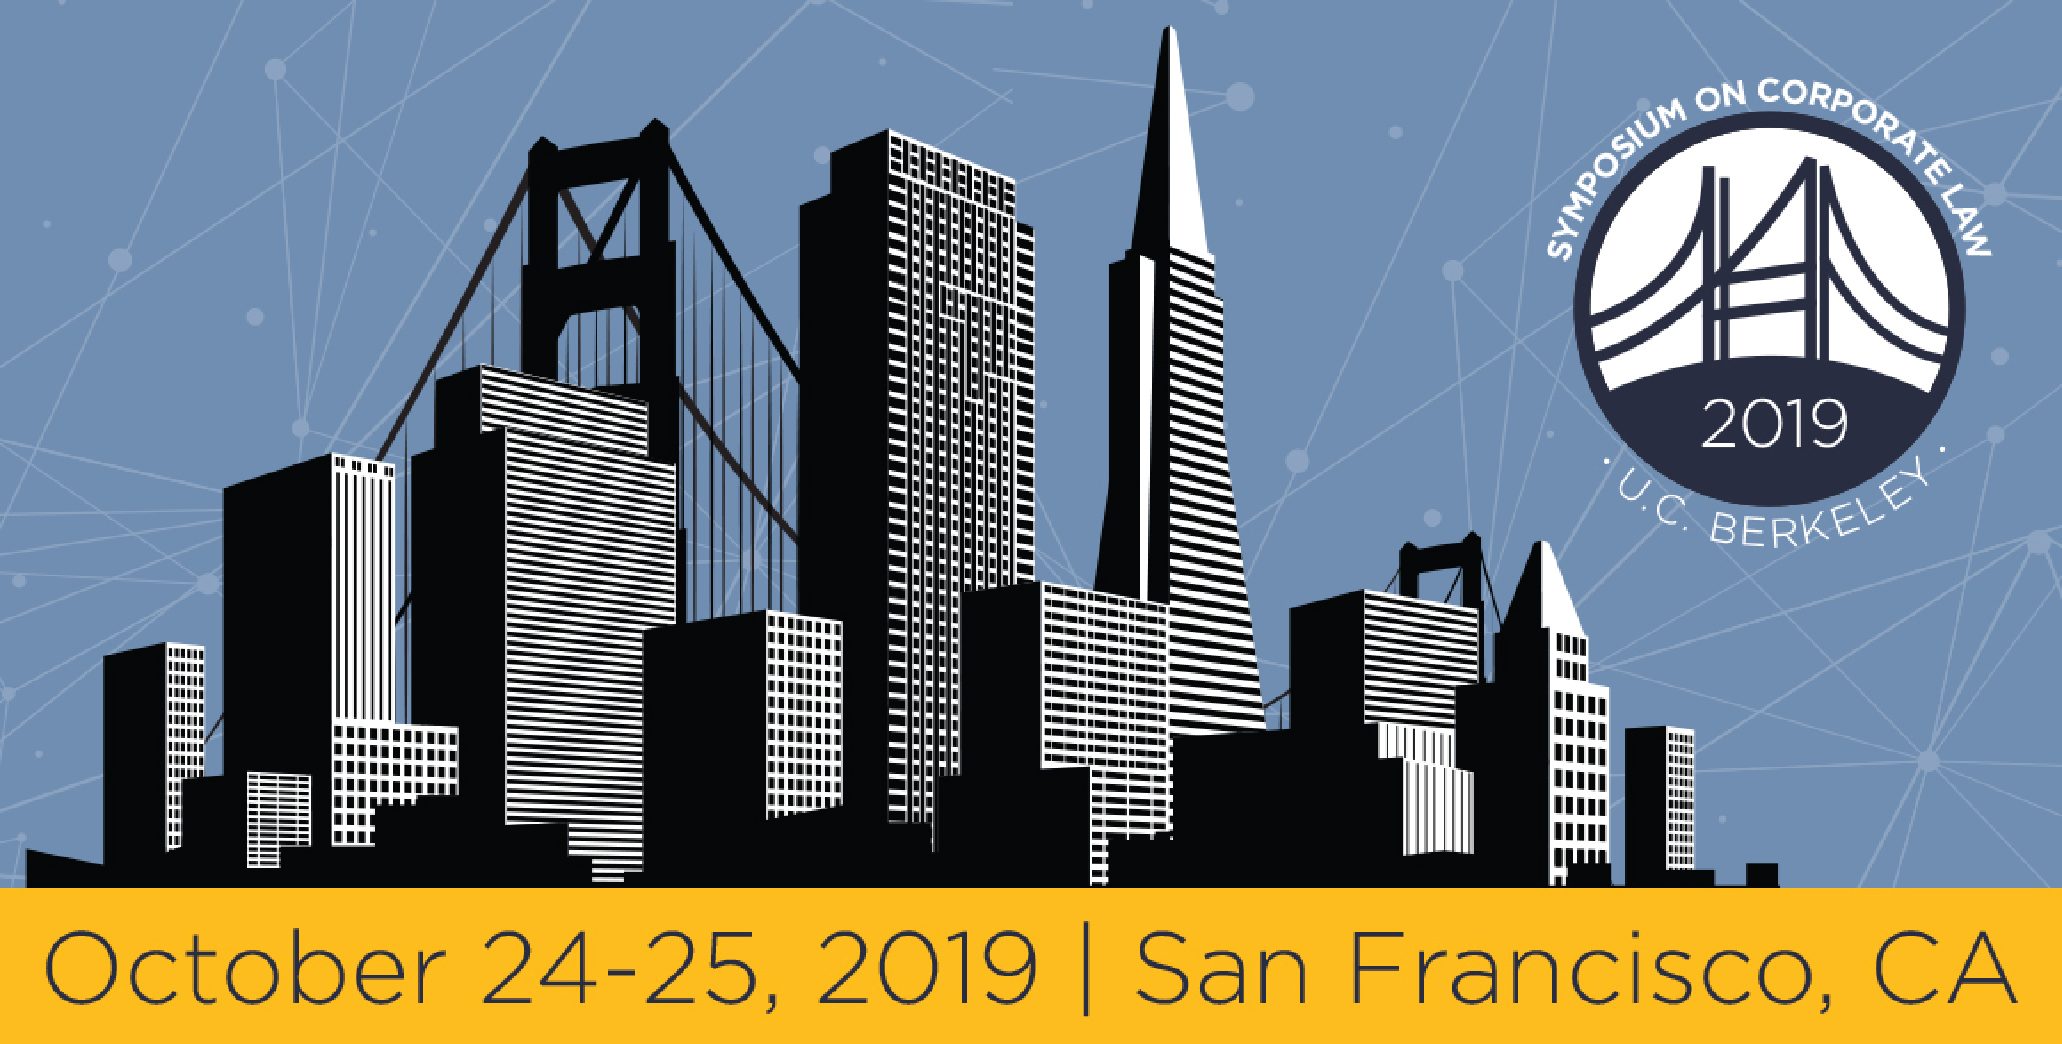 2019 UC Berkeley Symposium on Corporate Law